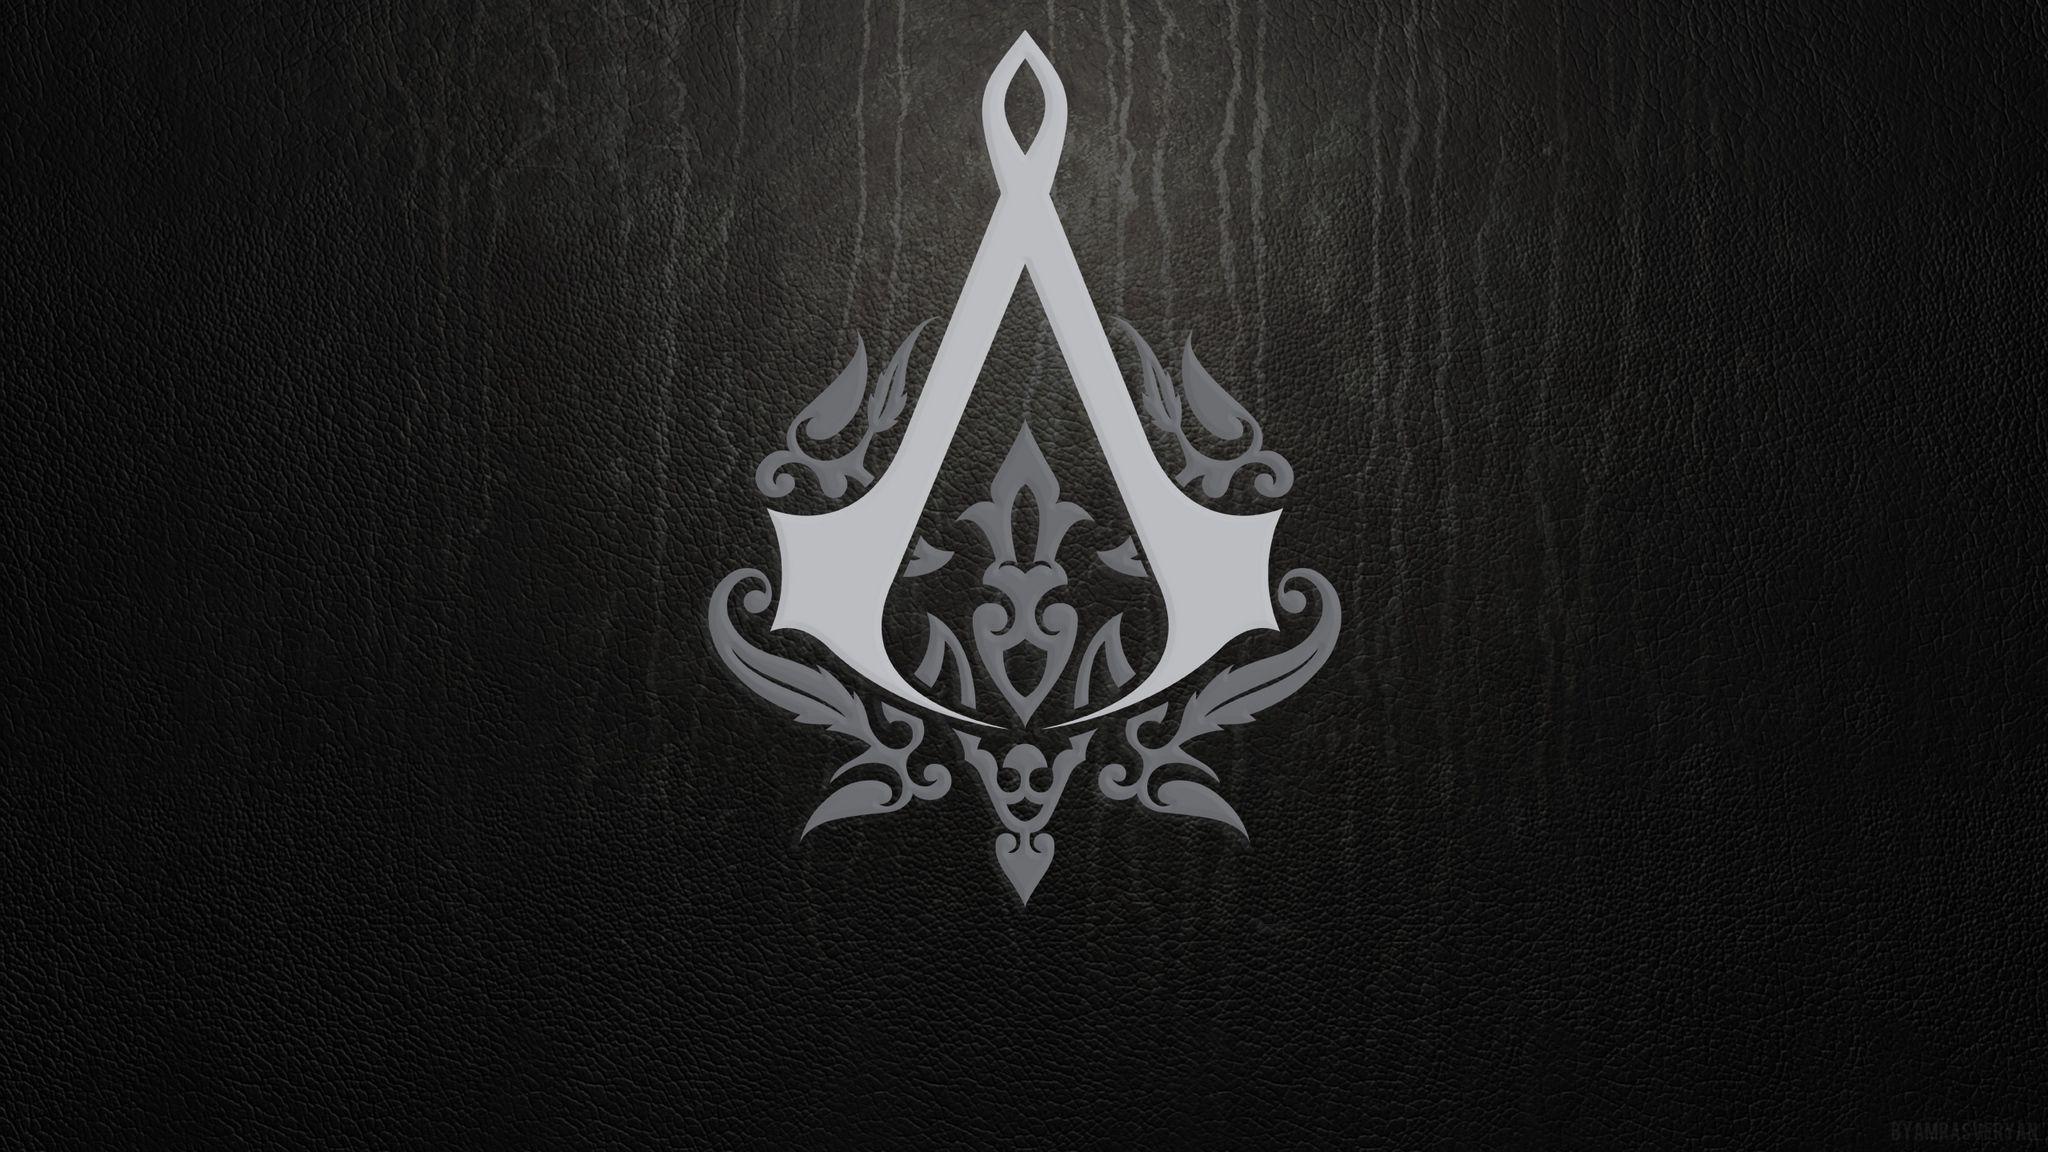 Download wallpaper 2048x1152 assassins creed, emblem, background